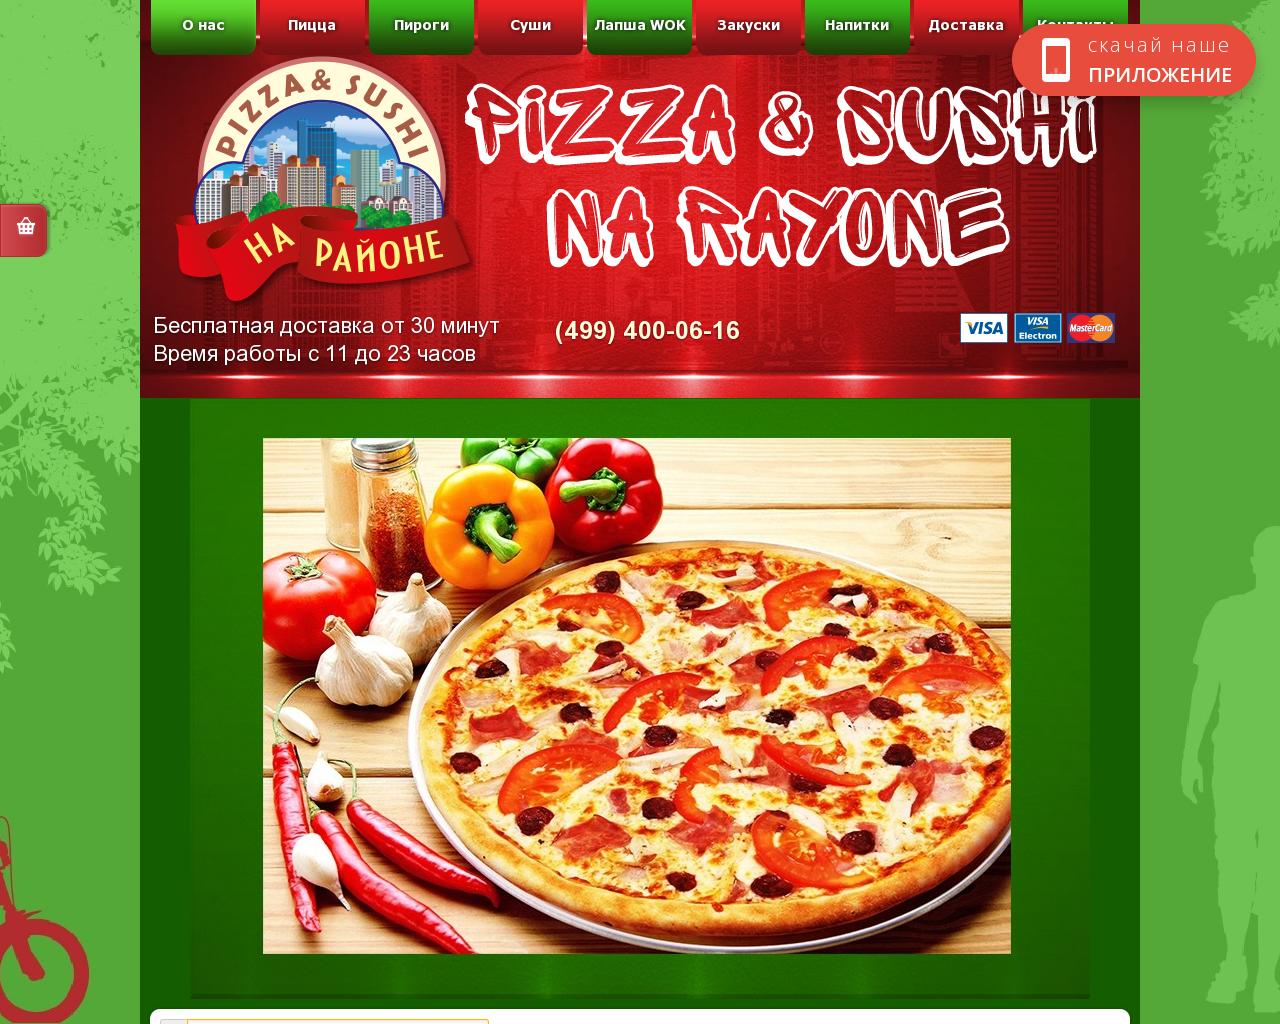 Изображение сайта pizza-narayone.ru в разрешении 1280x1024